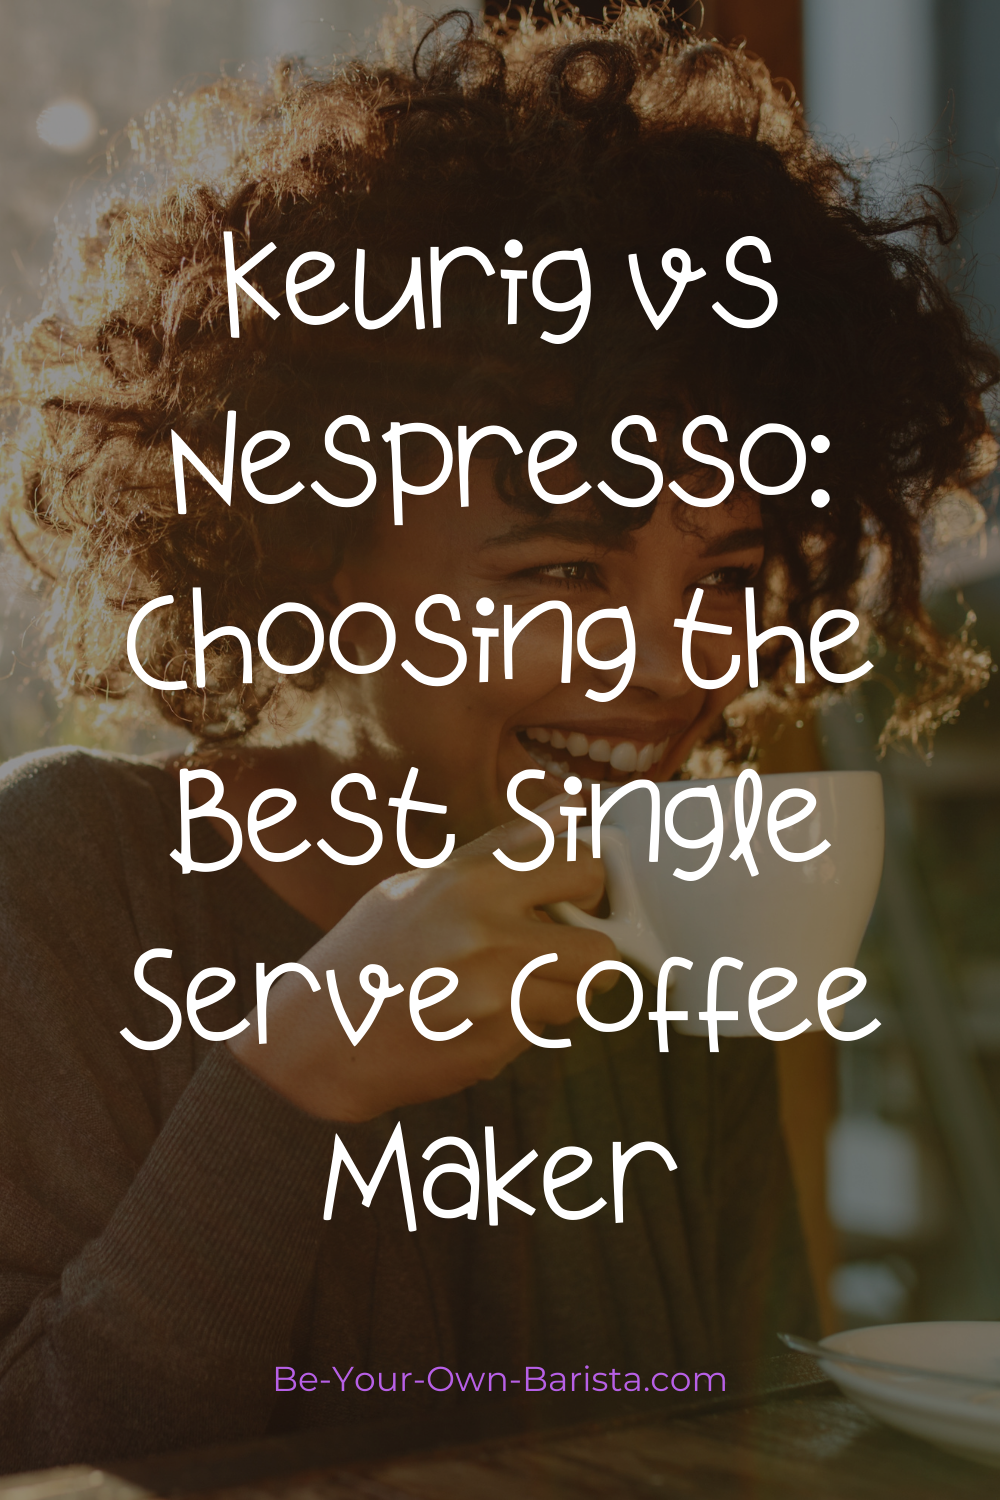 Is Nespresso Better Than Keurig?